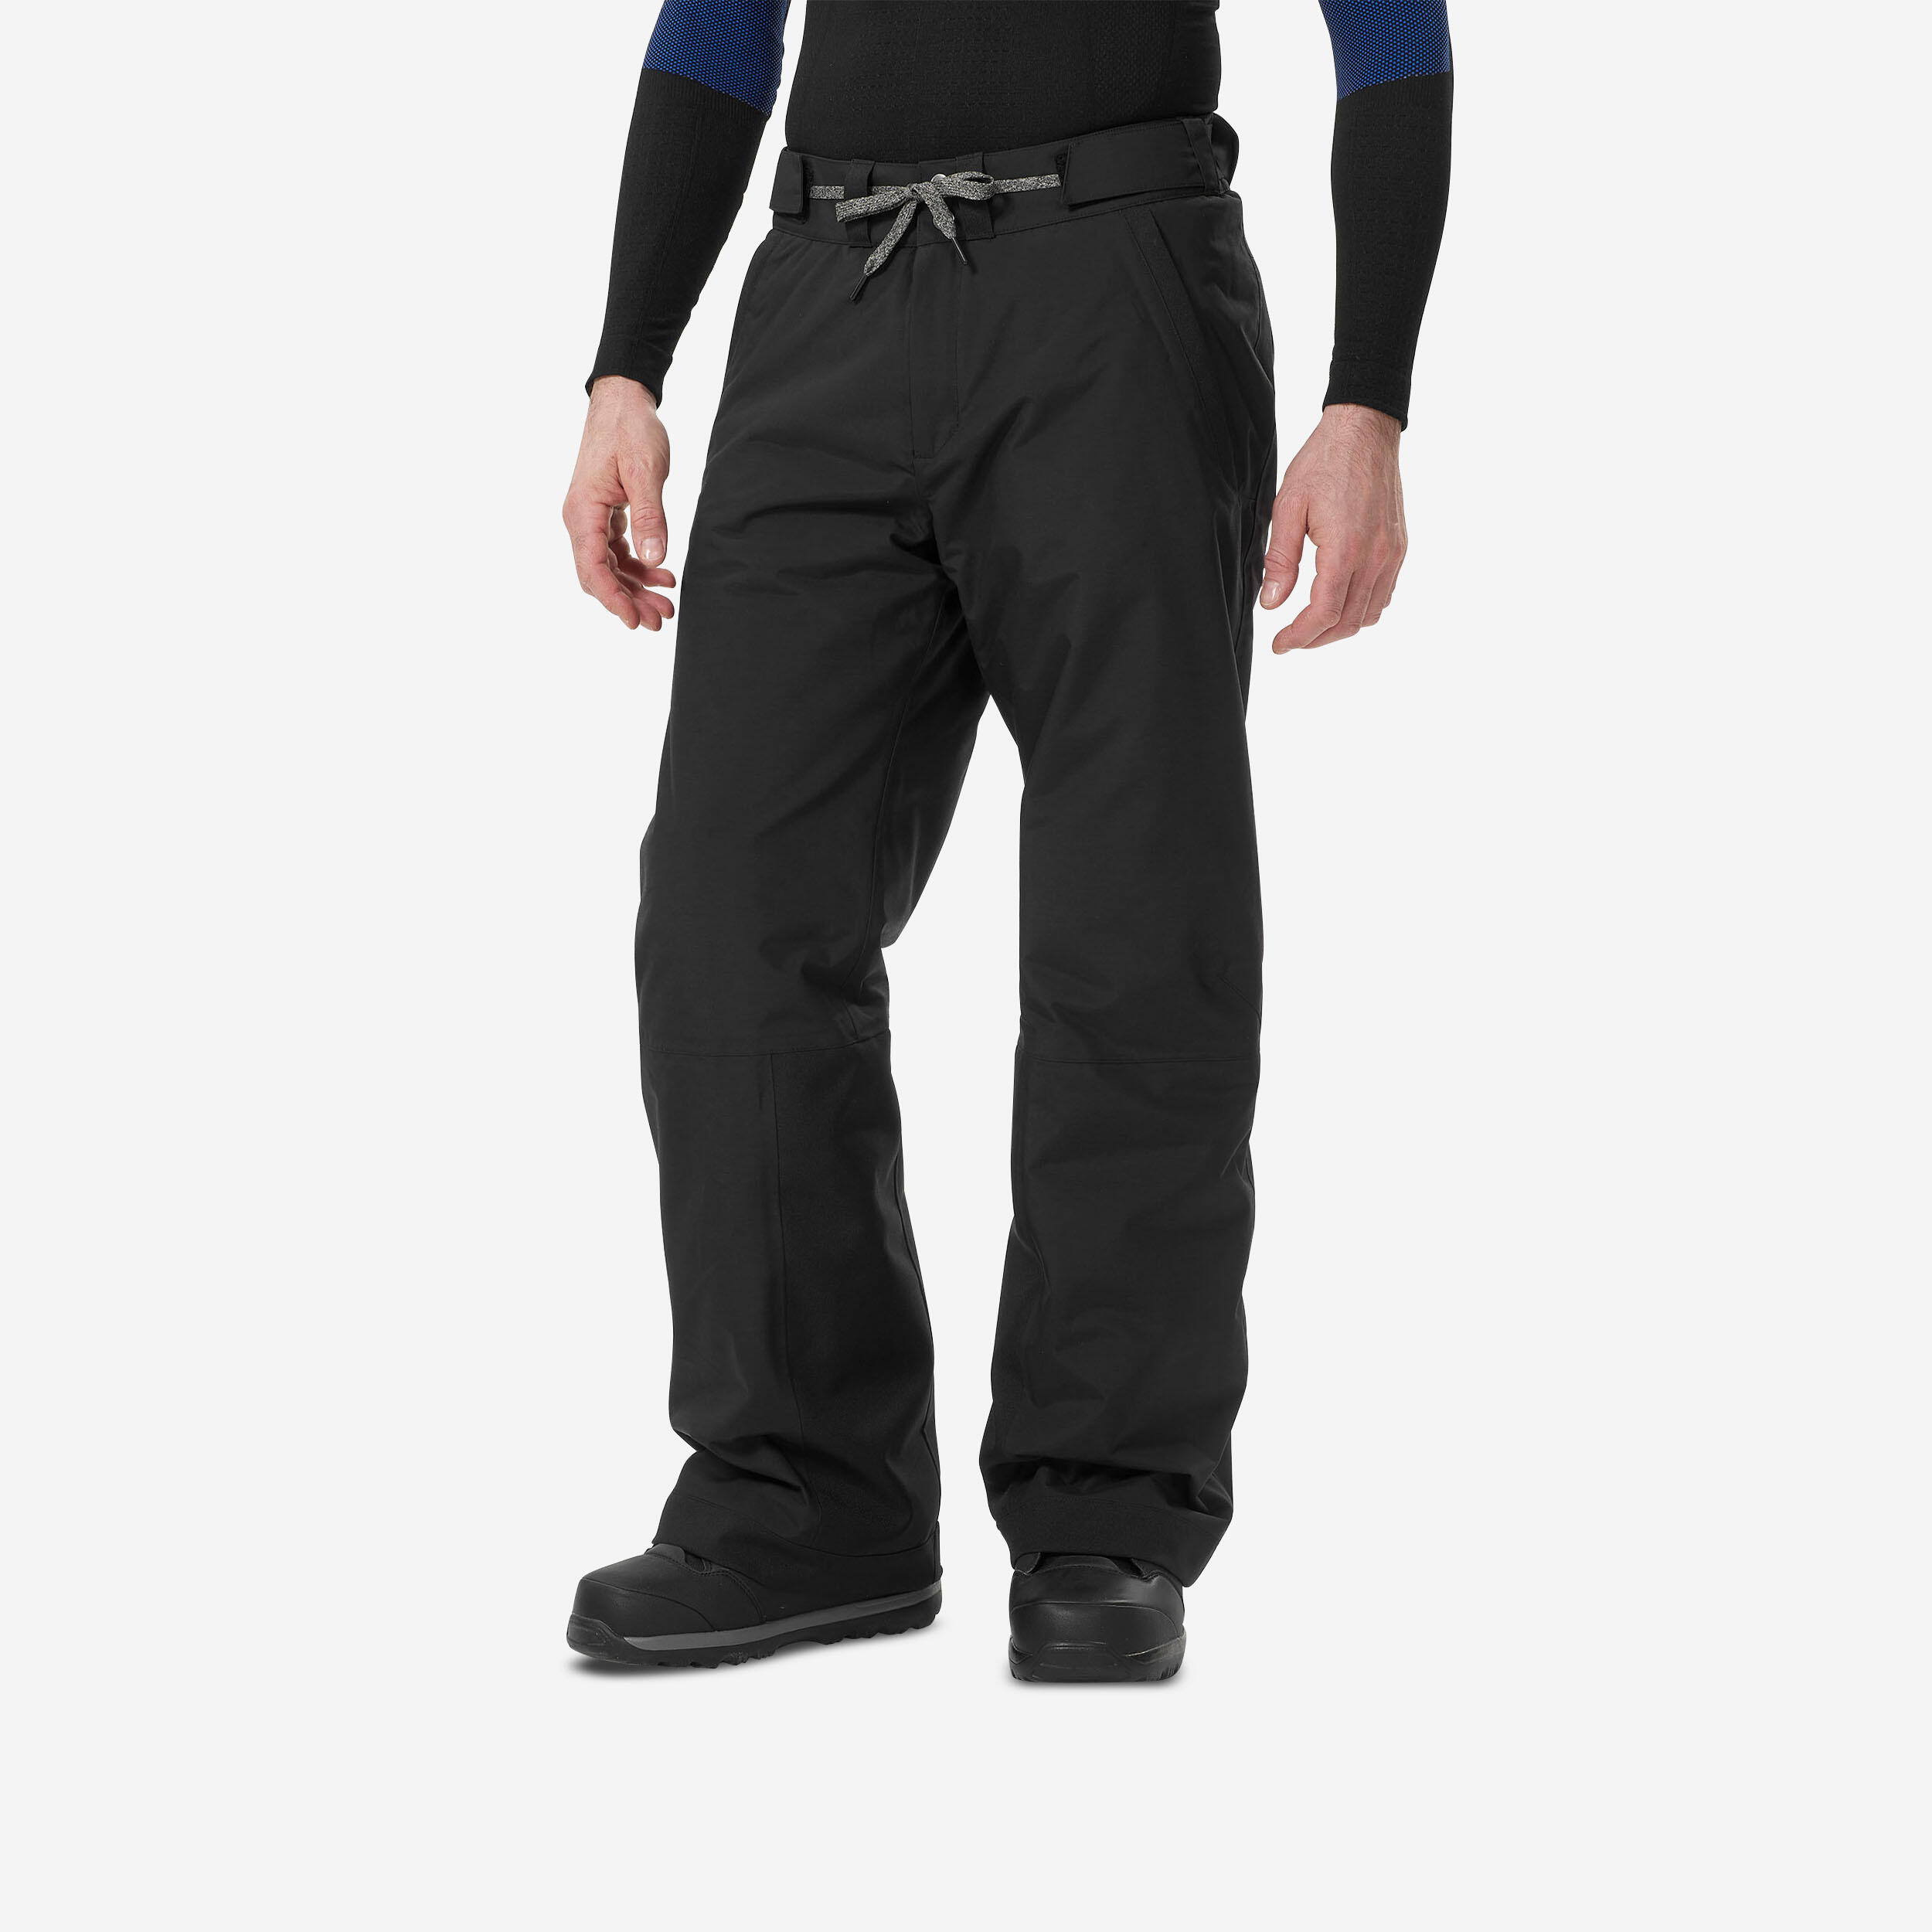 Image of Men’s Snowboard Pants - SNB 100 Black